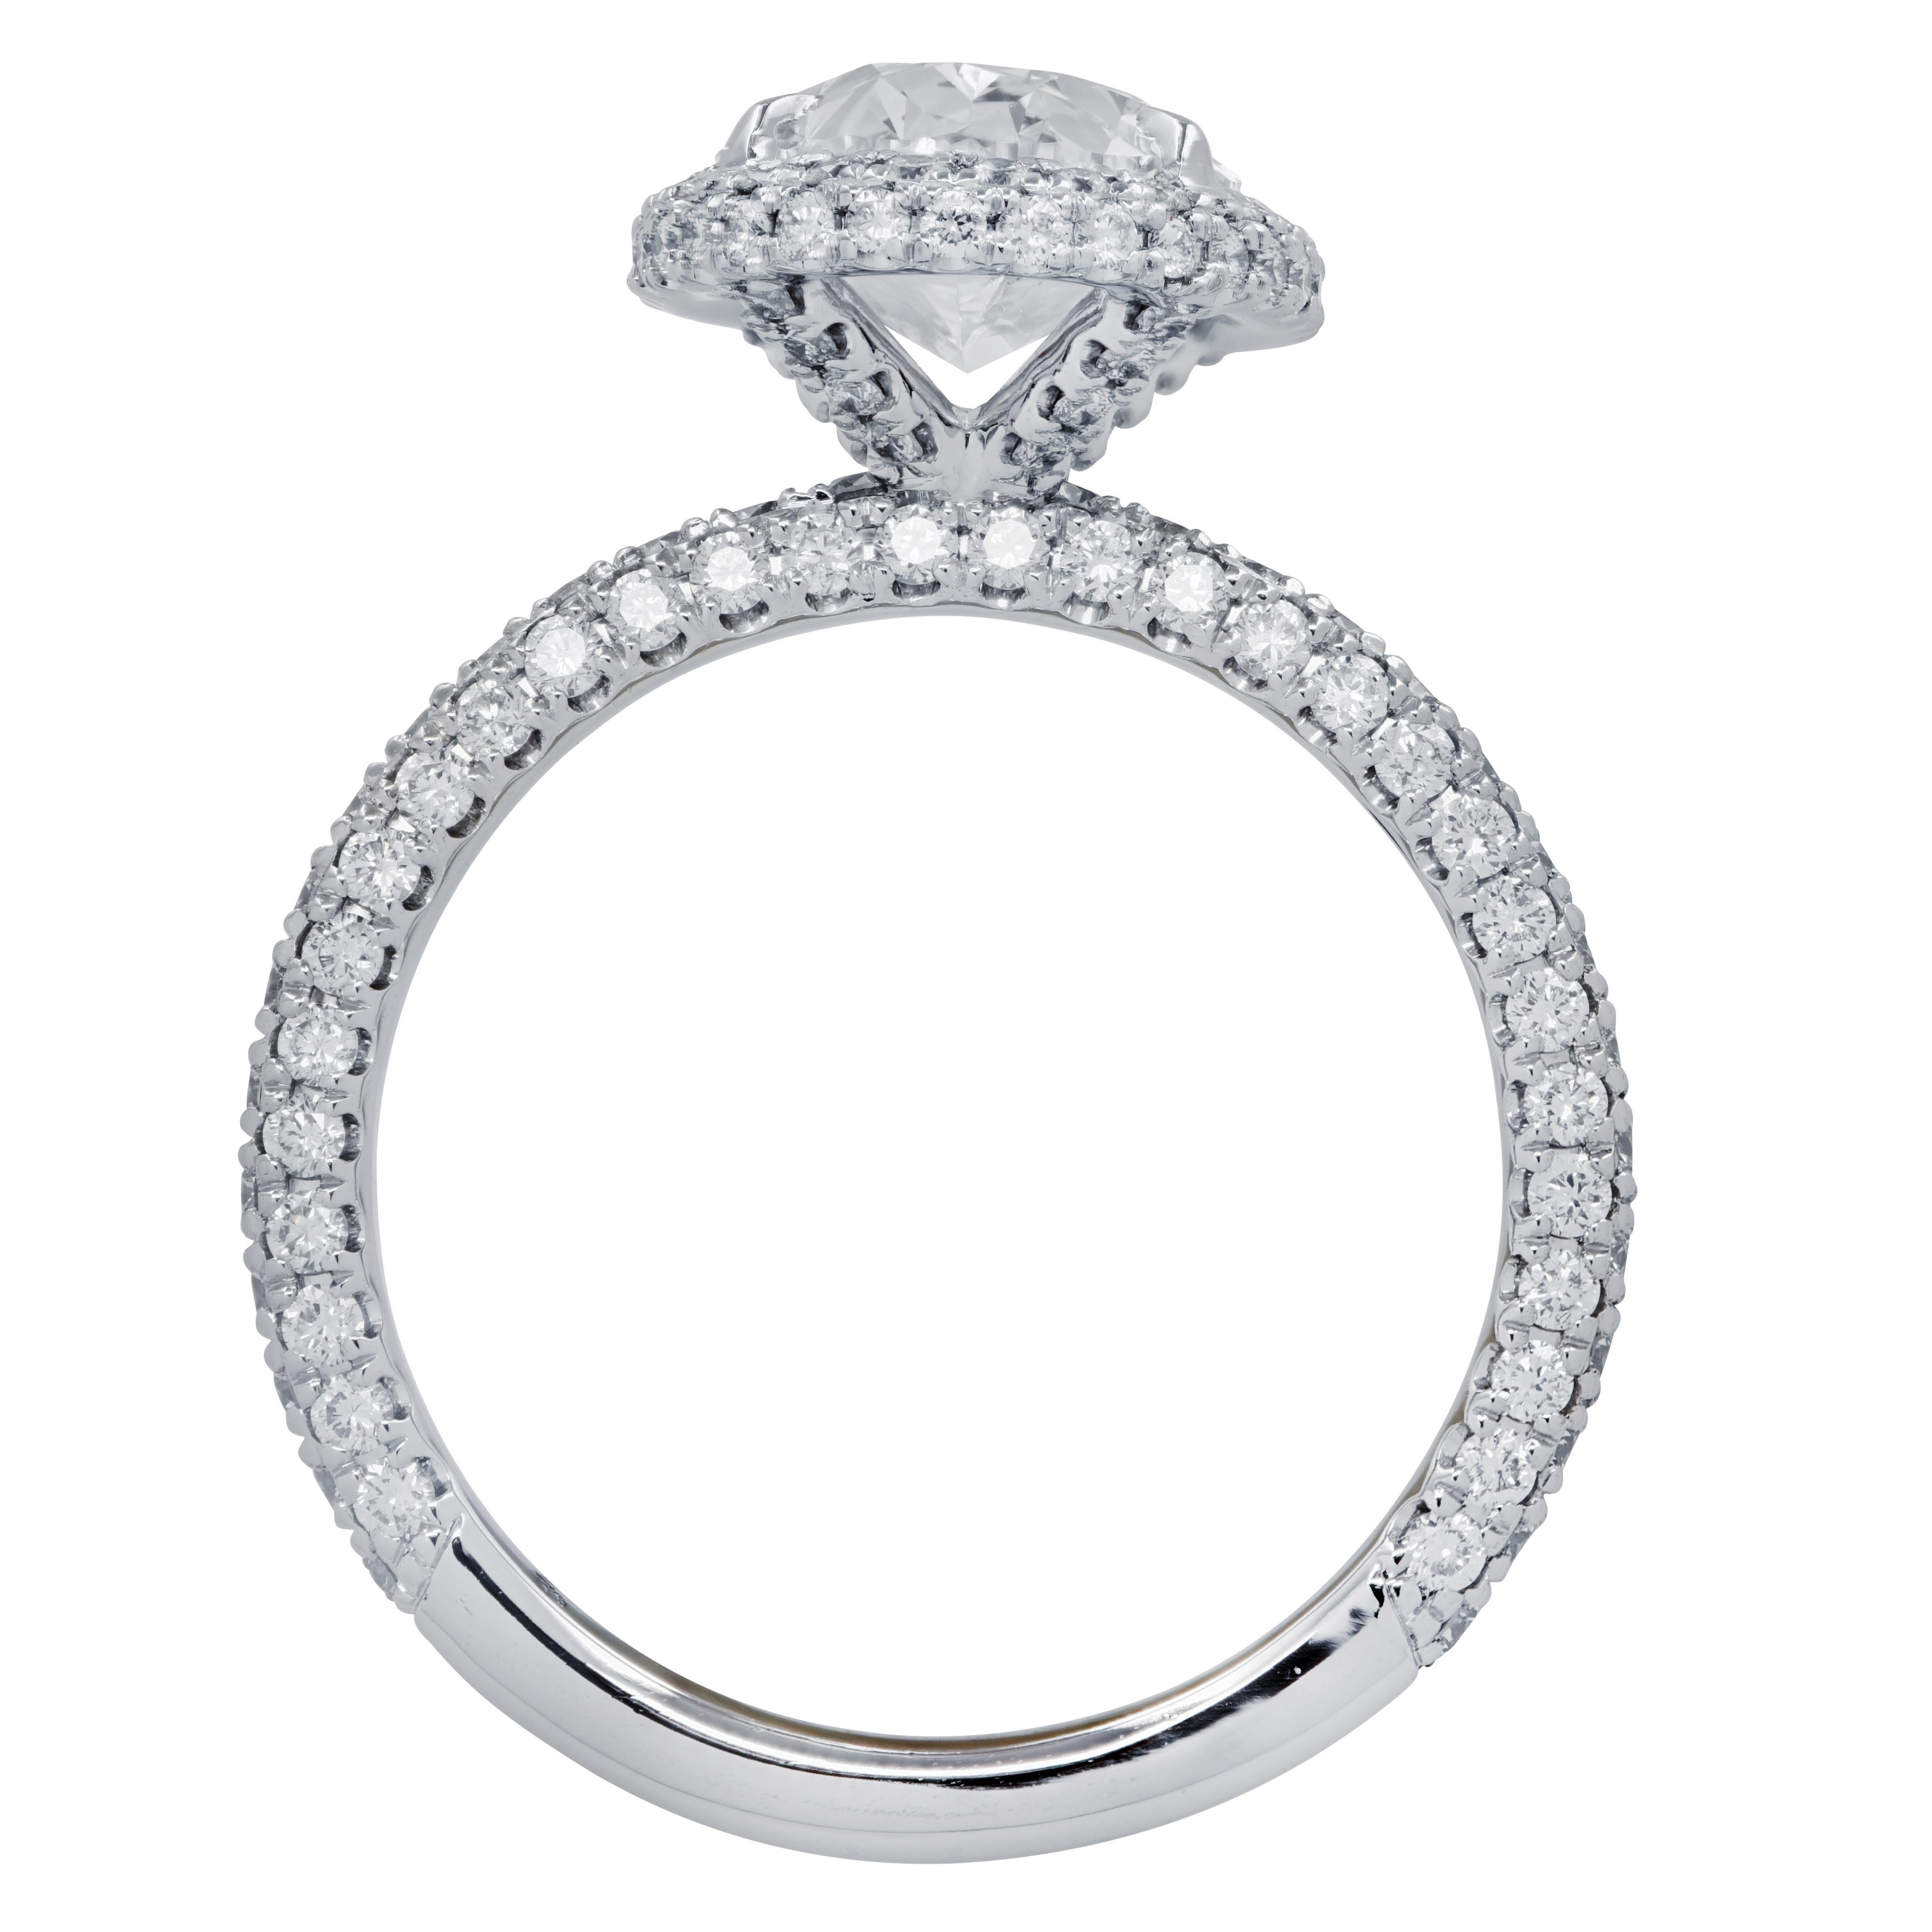 Oval Cut Vivid Diamonds GIA Certified 2.07 Carat Diamond Halo Engagement Ring 